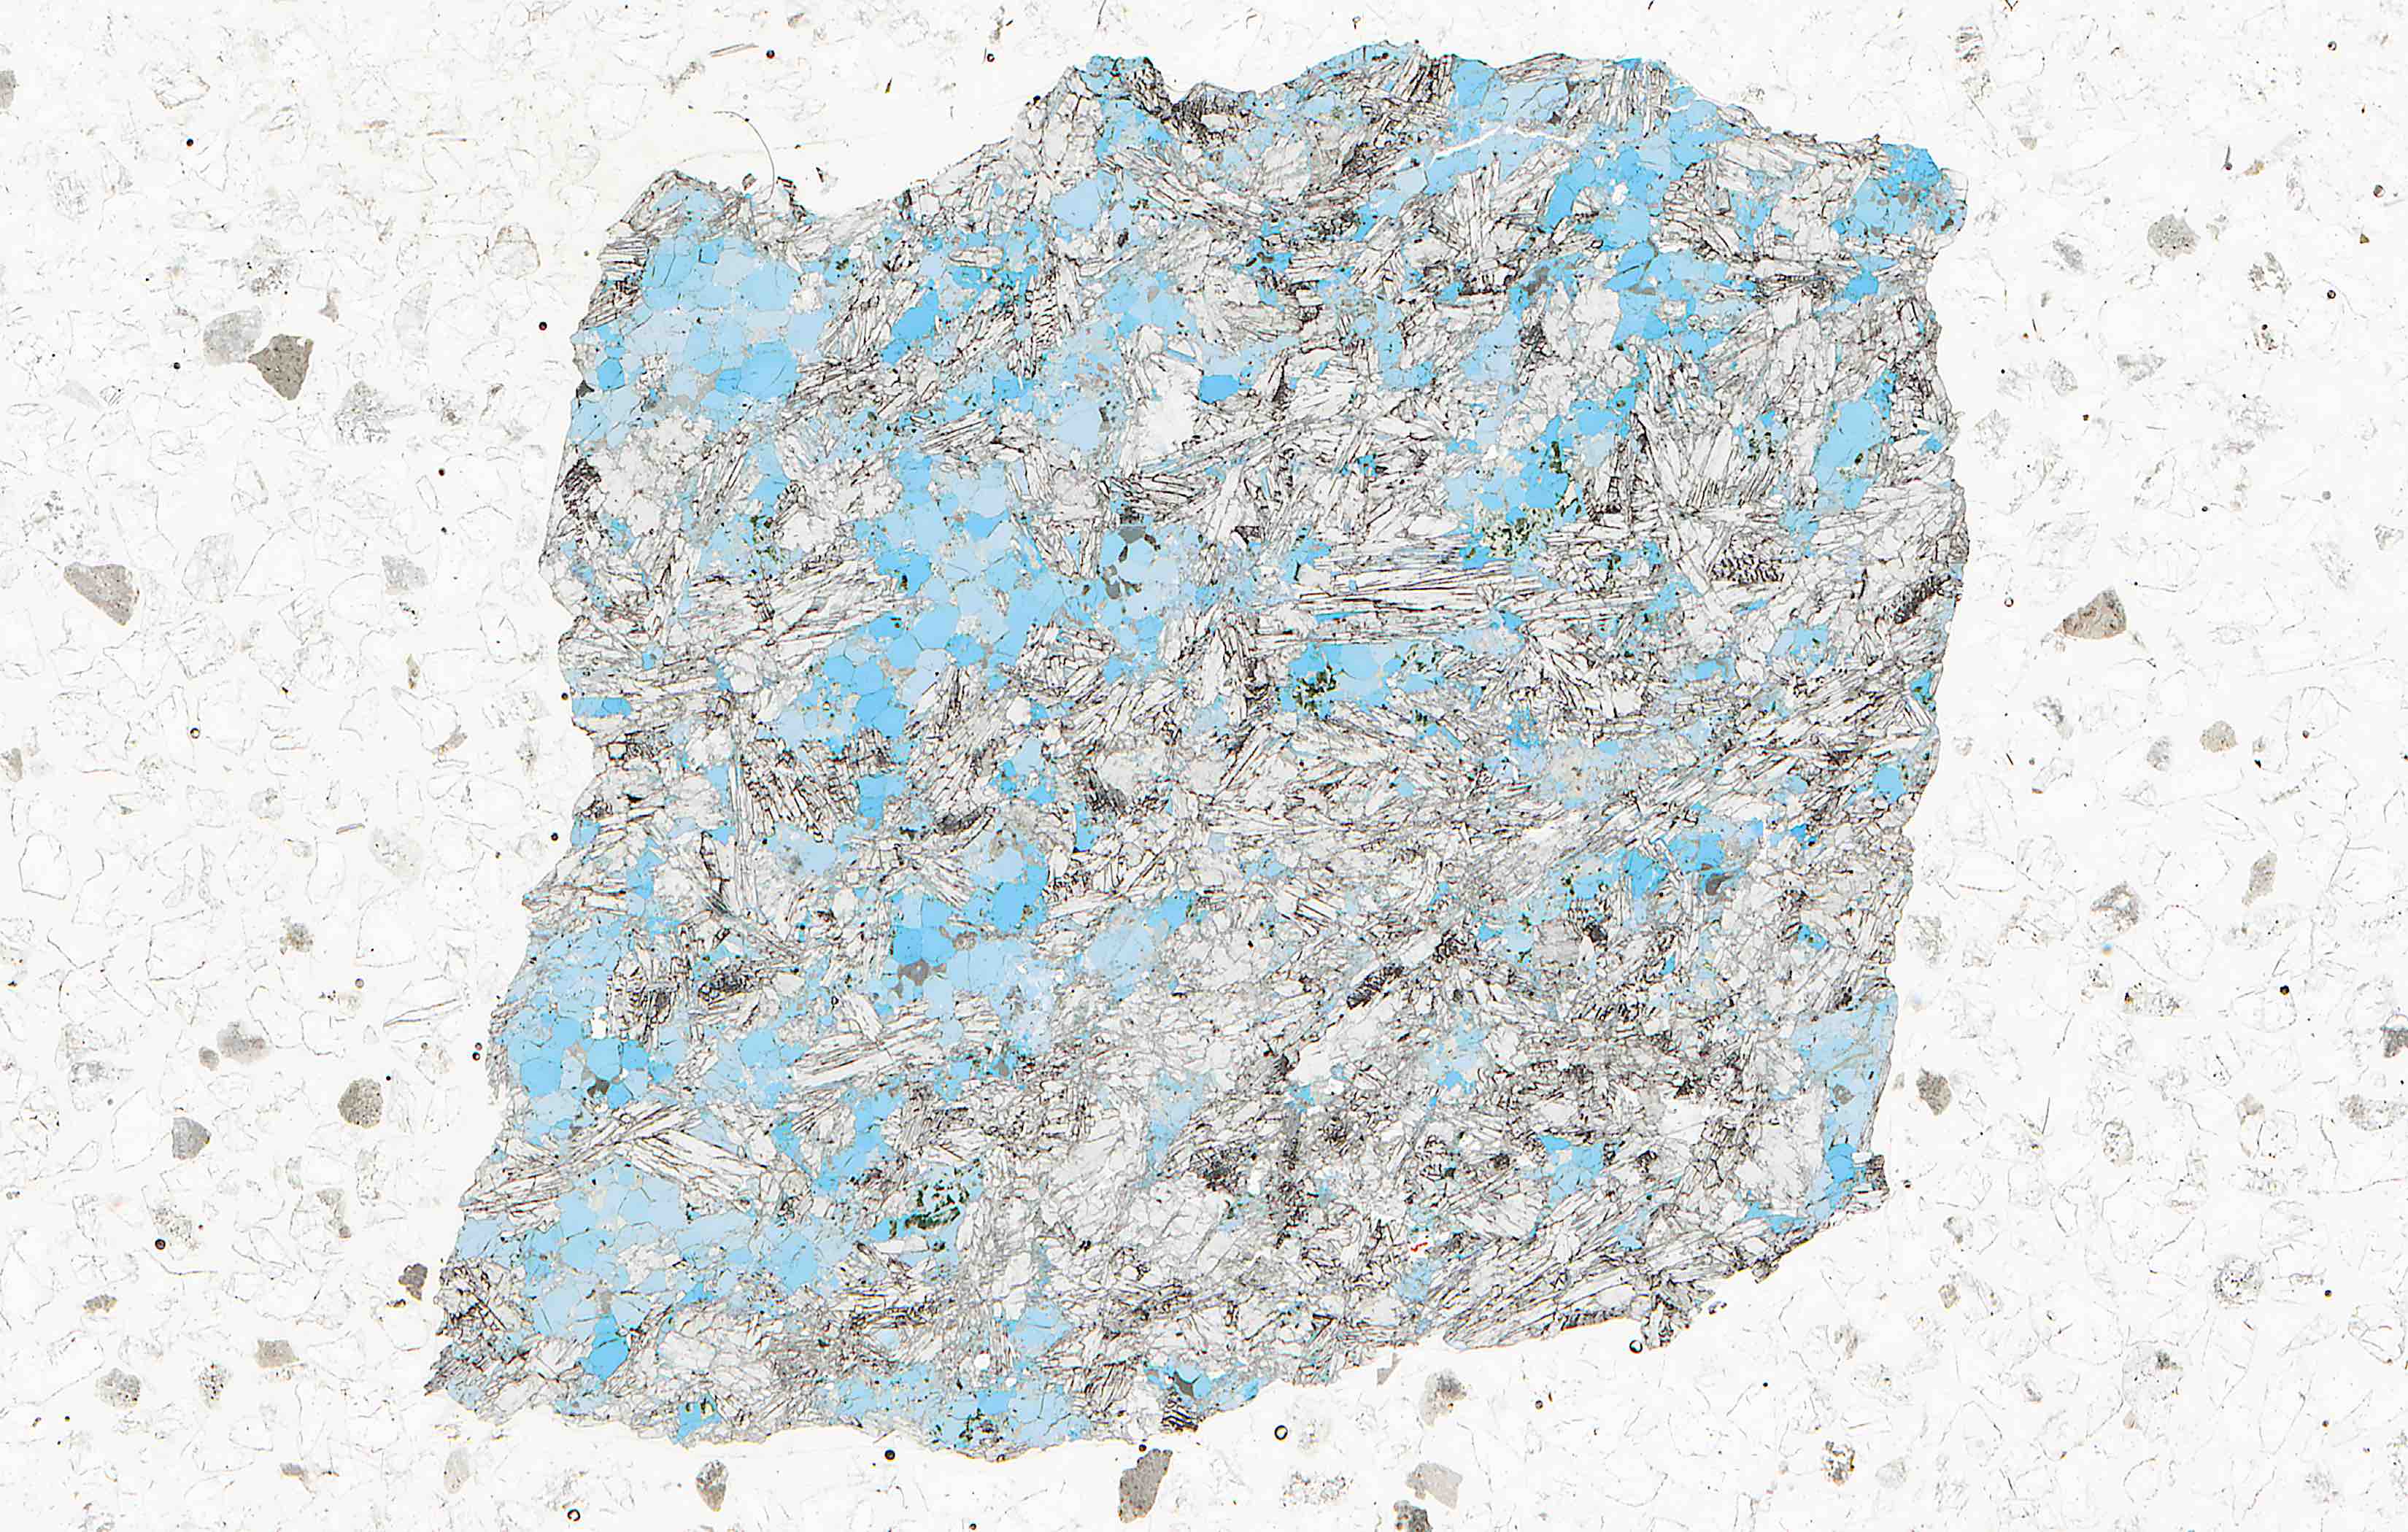 lazulite and kyanite